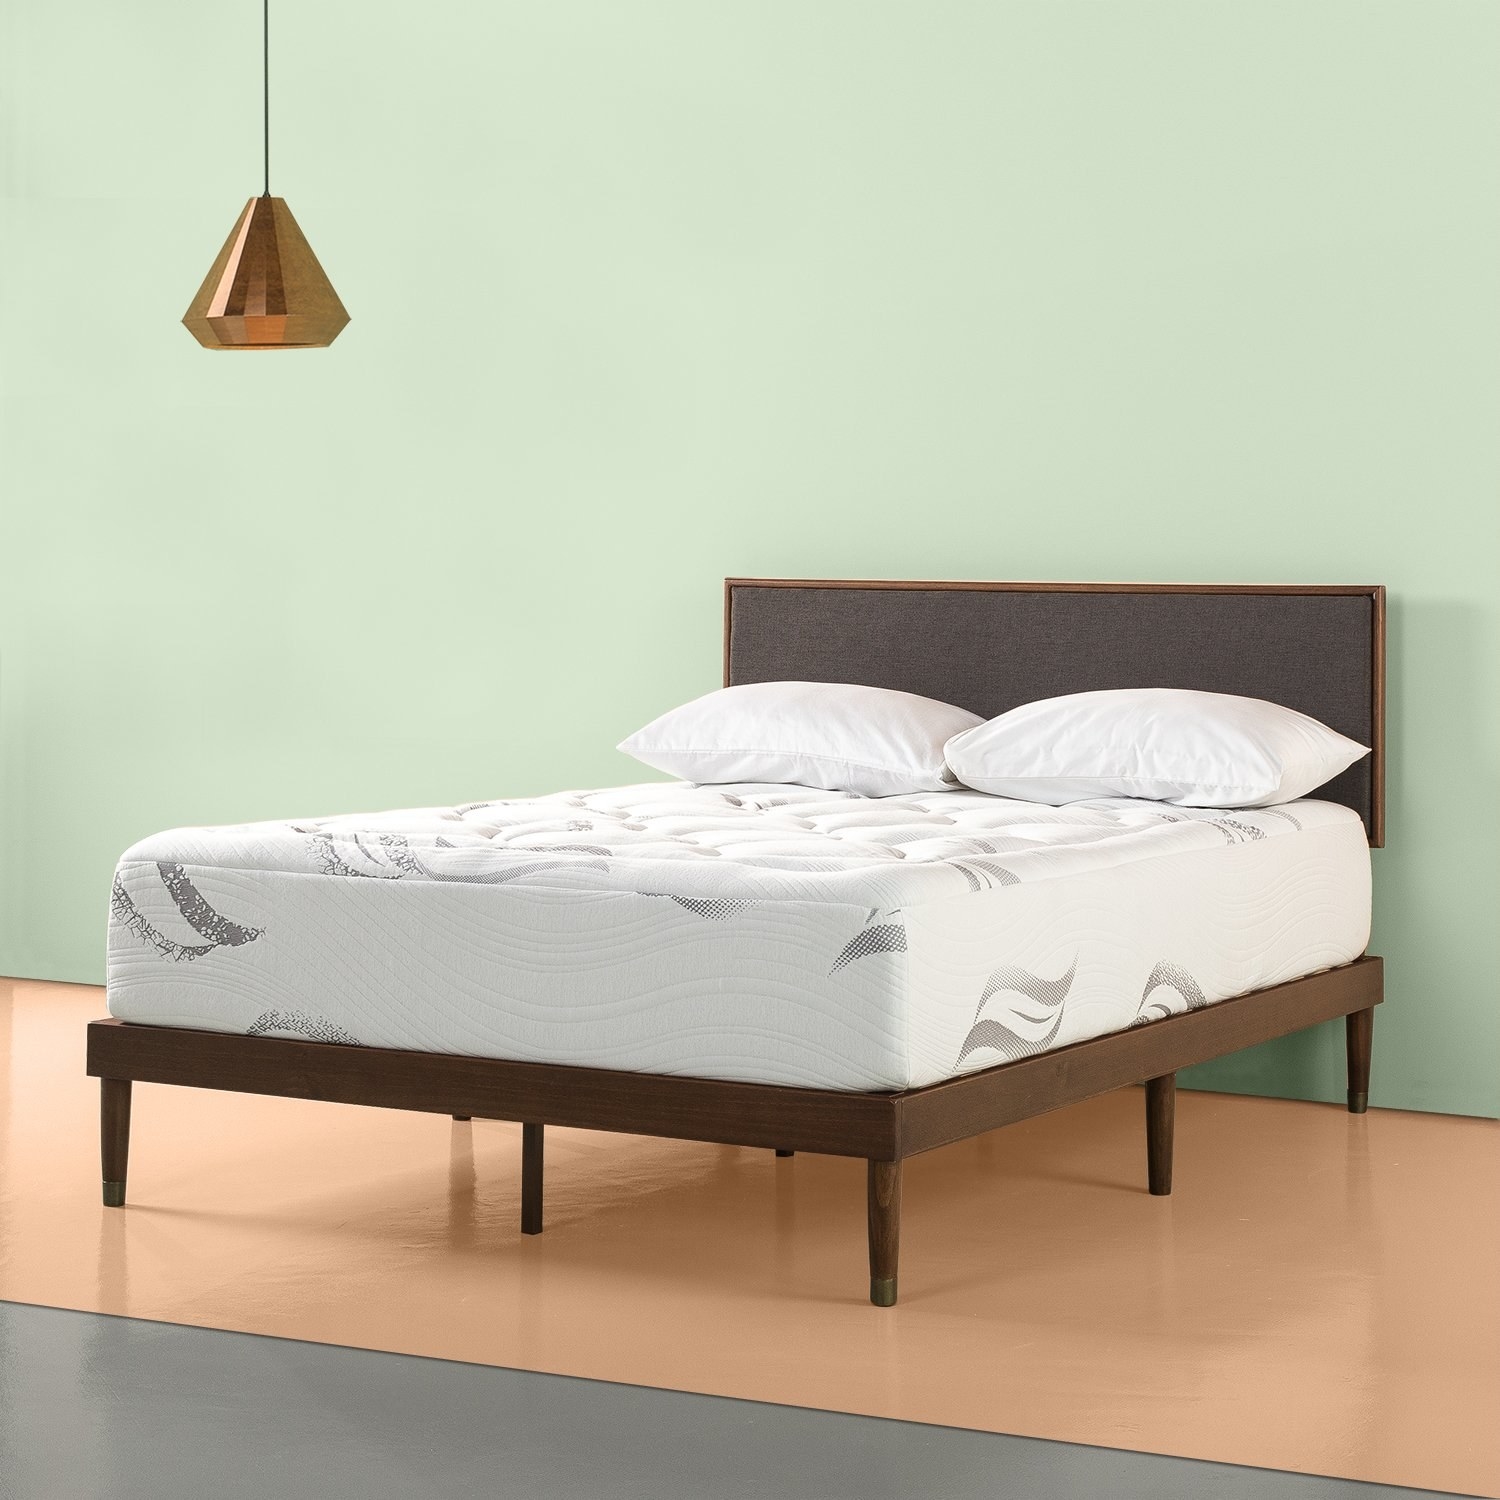 a dense mattress on a simple bedframe